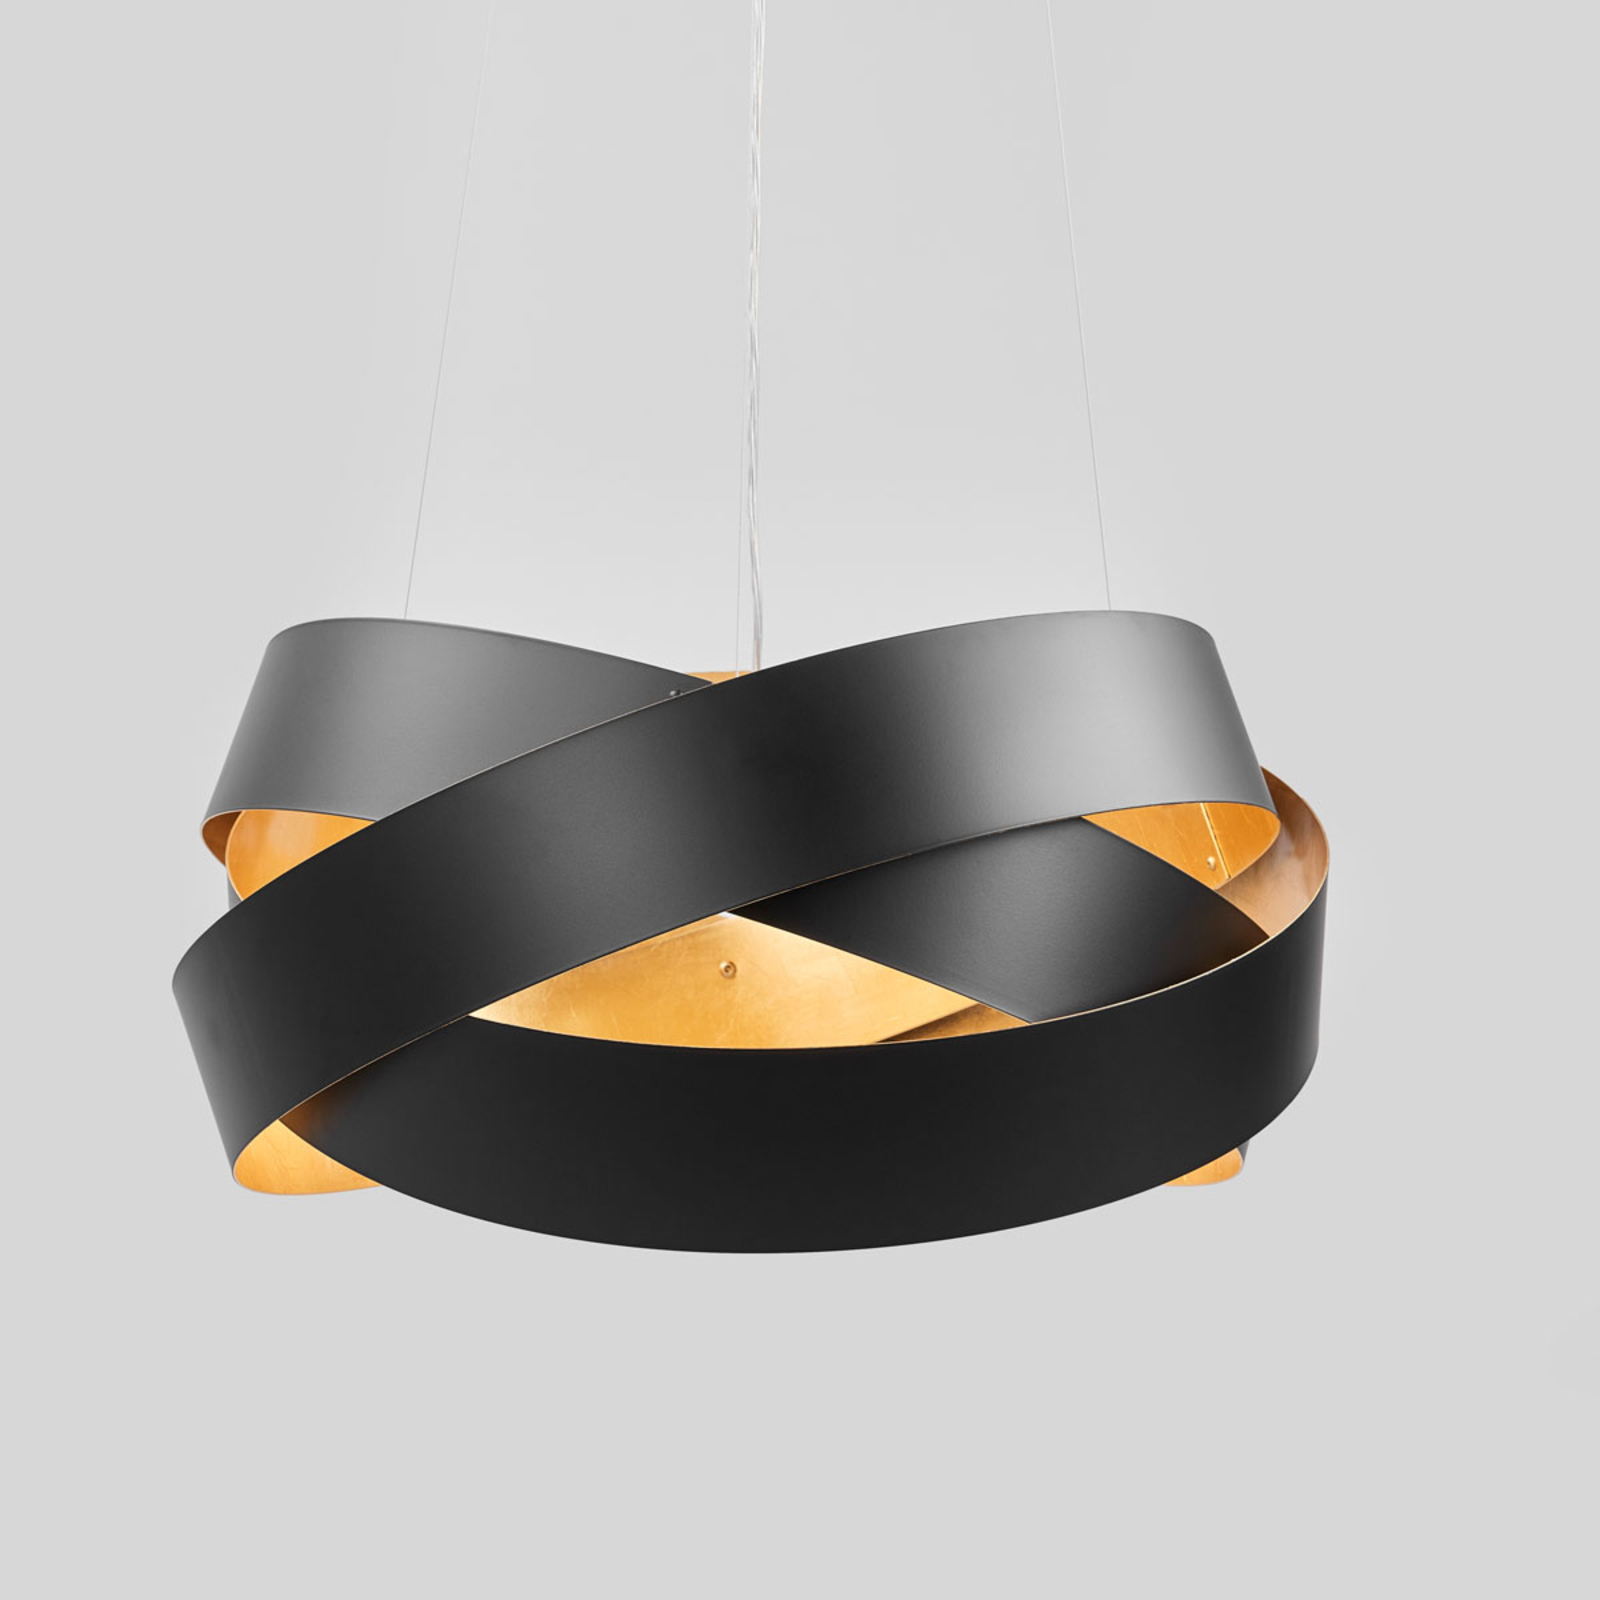 Pura hanglamp in zwart/goud, 60cm, 8x G9